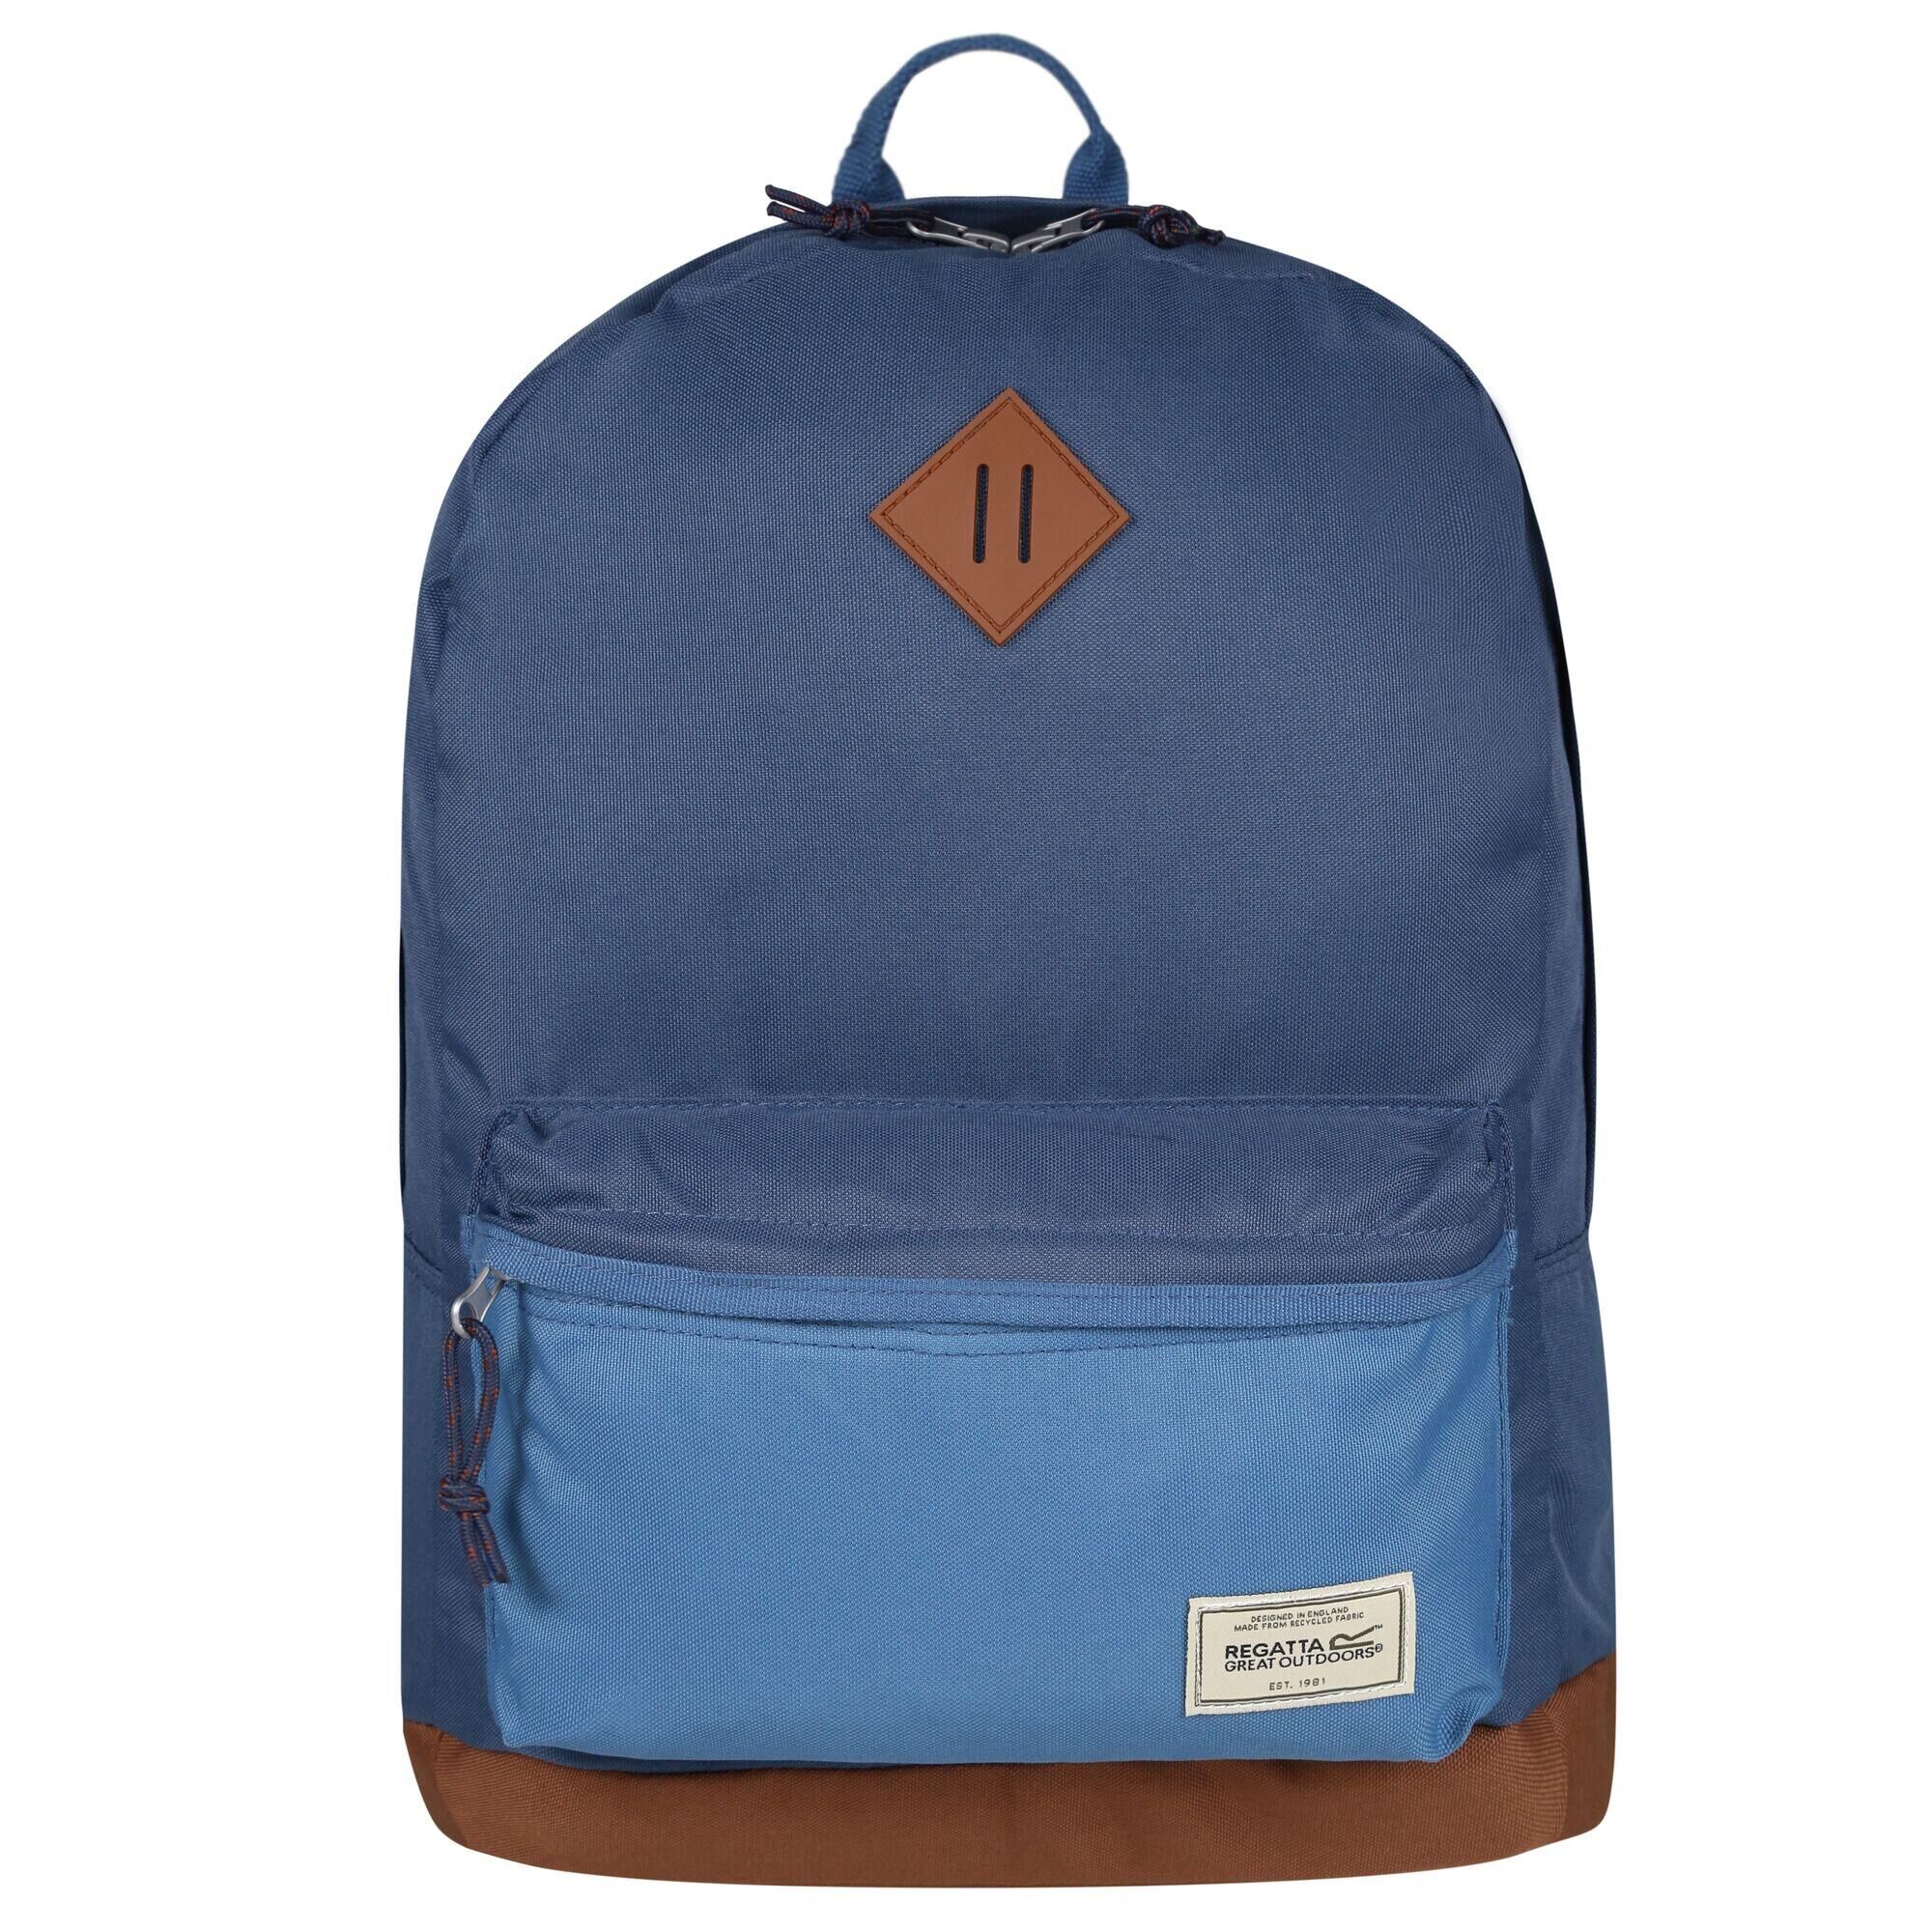 REGATTA Stamford 20L Backpack (Dark Denim/Stellar Blue)